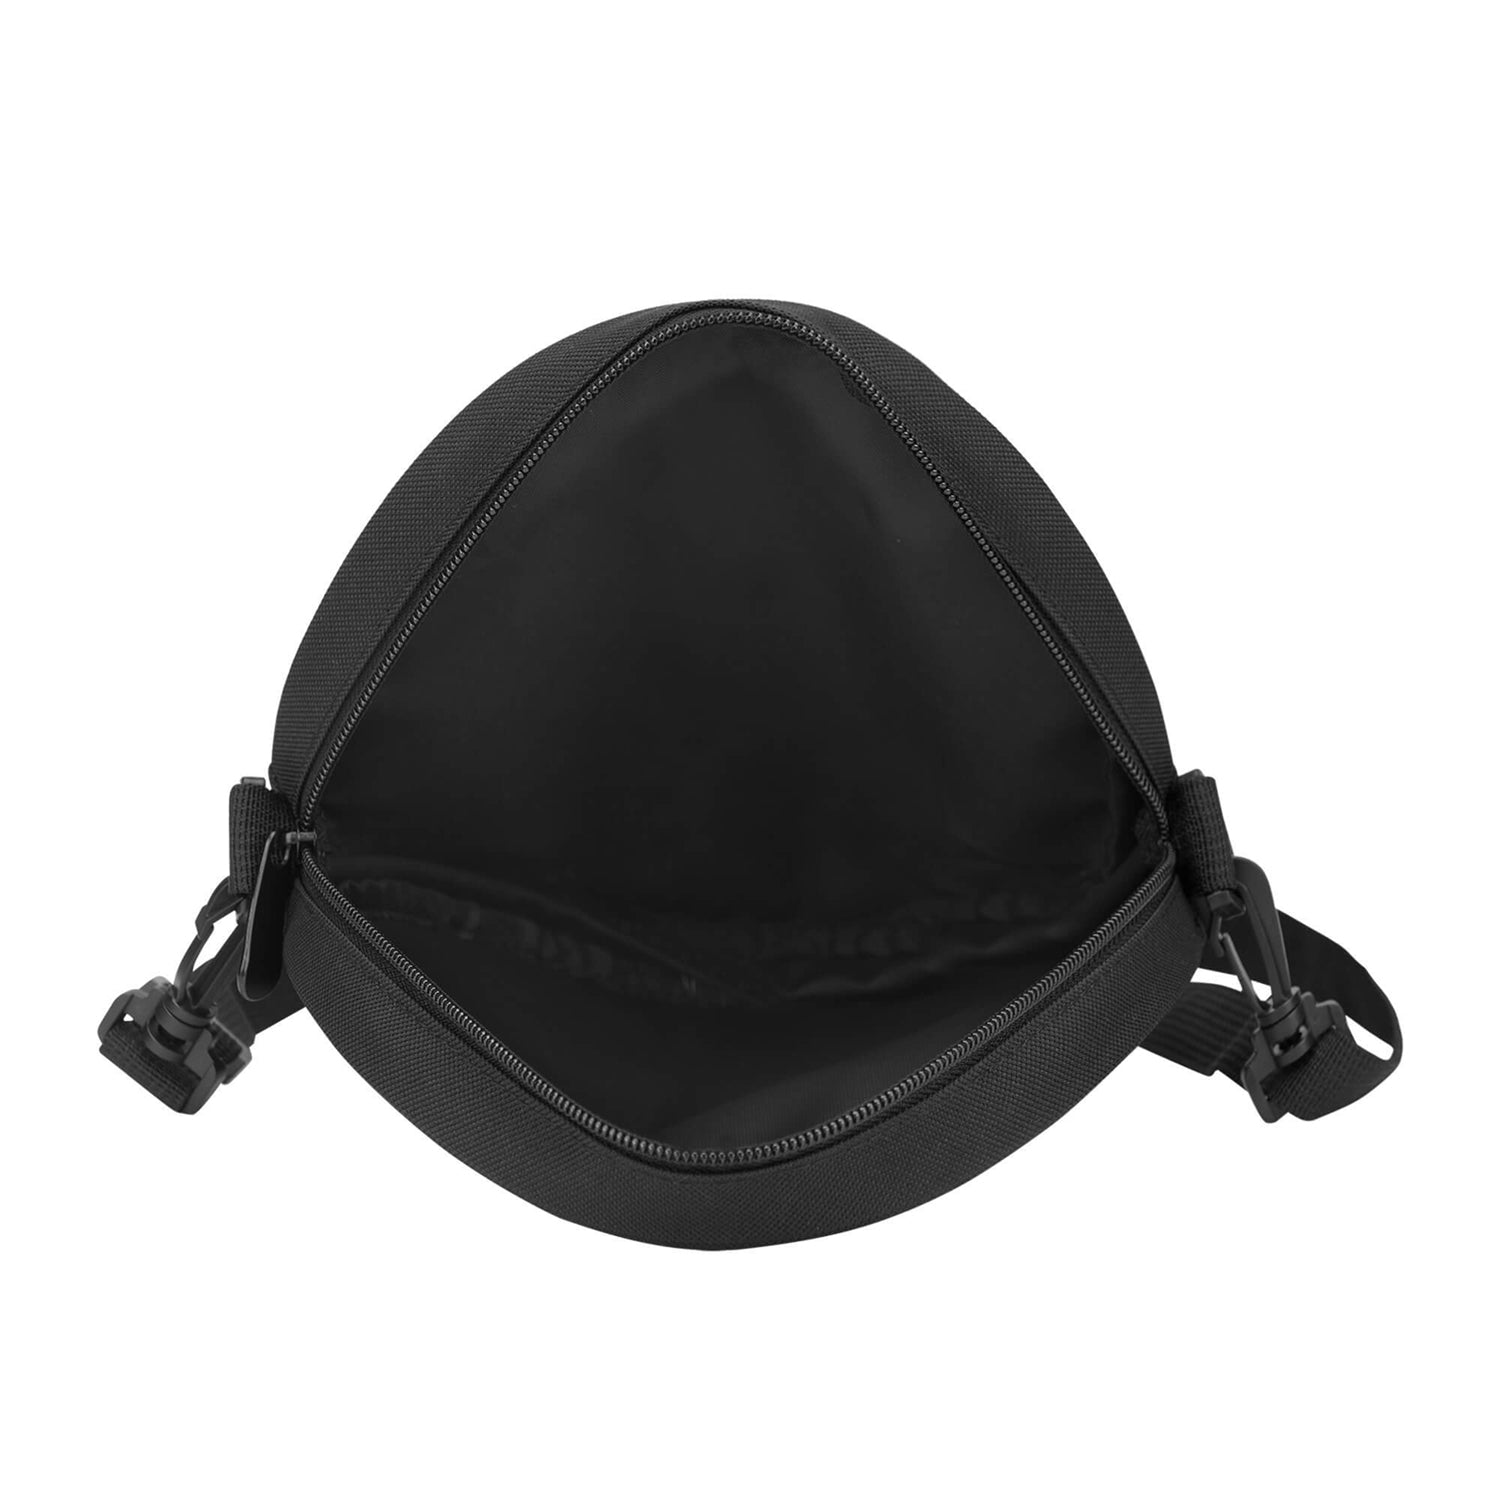 muirhead-tartan-round-satchel-bags